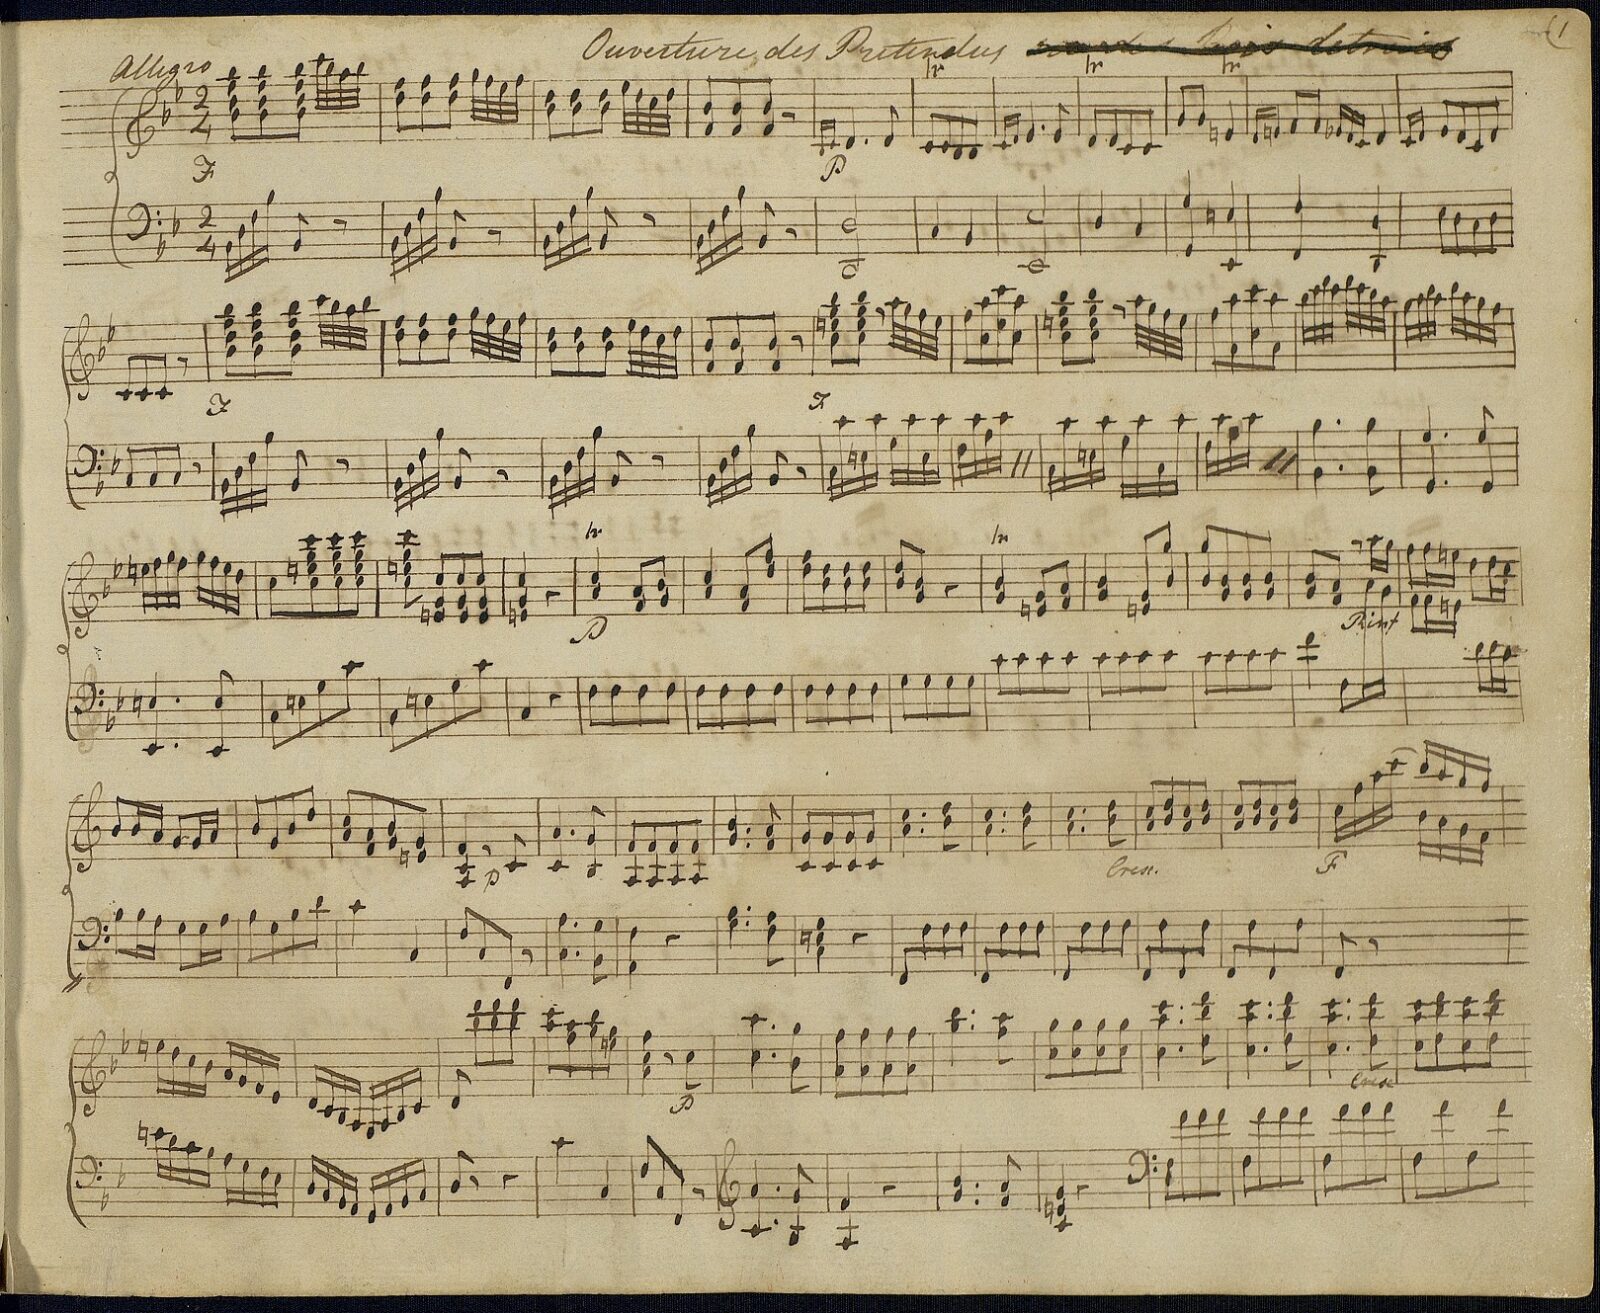 A page from Jane Austen's handwritten music book